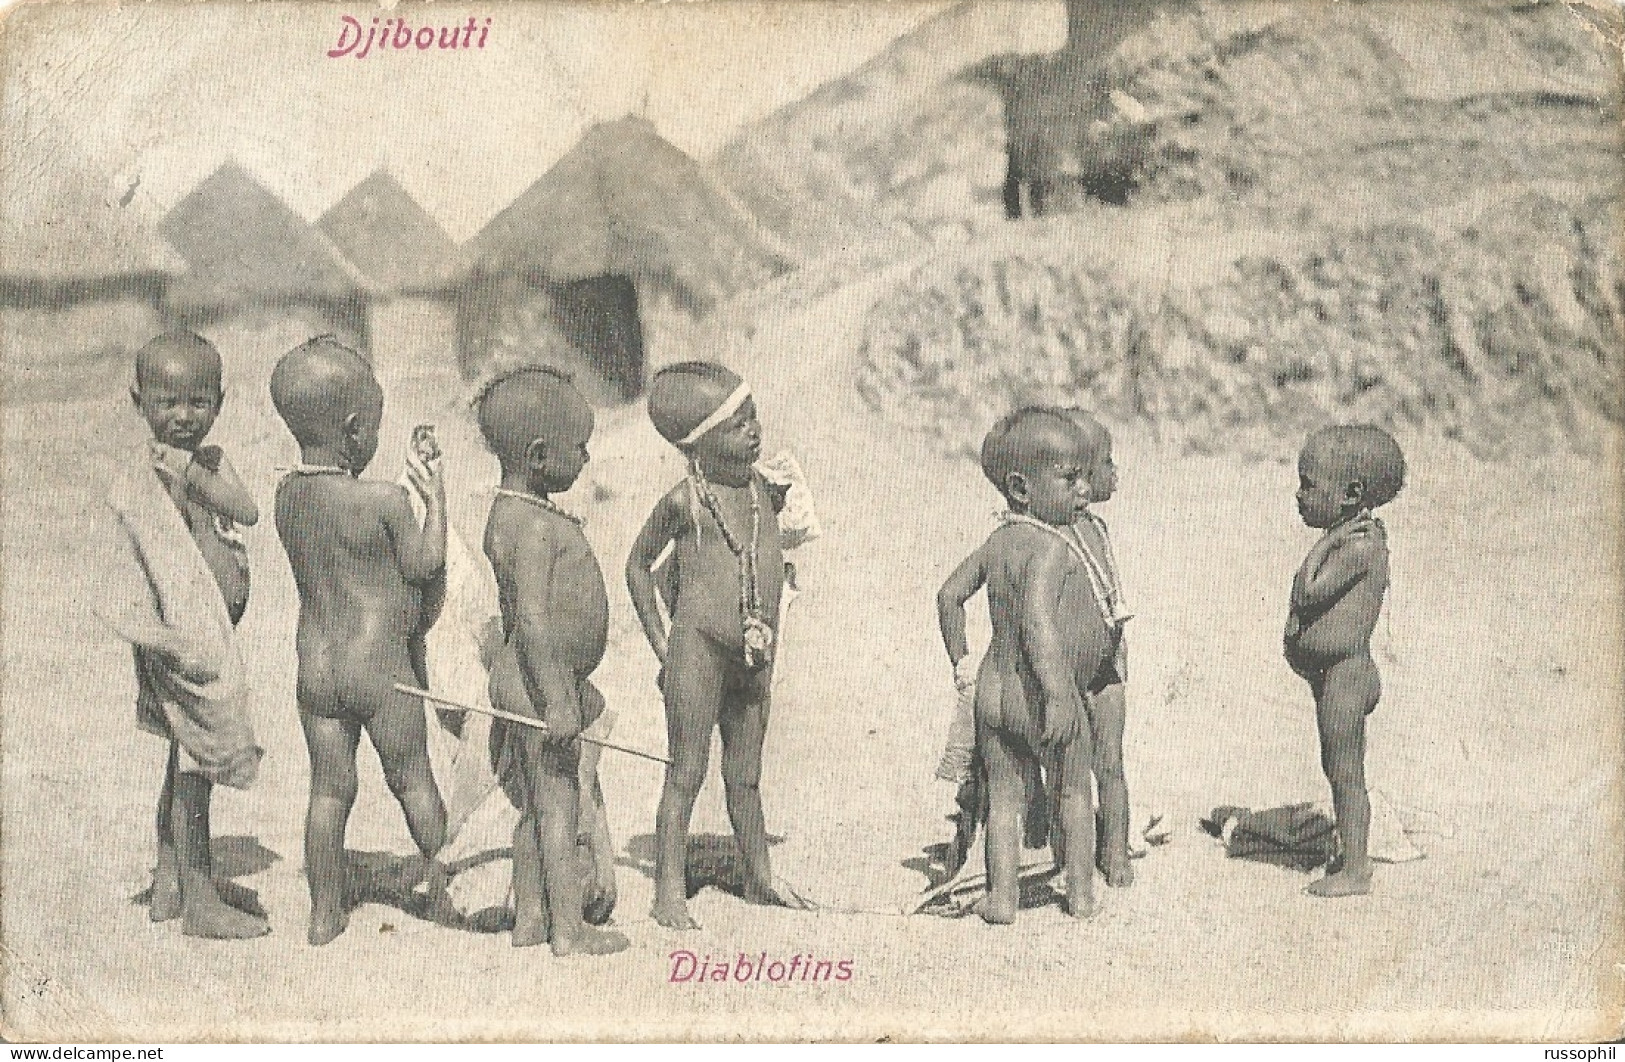 DJIBOUTI - DIABLOTINS - 1904 - Africa